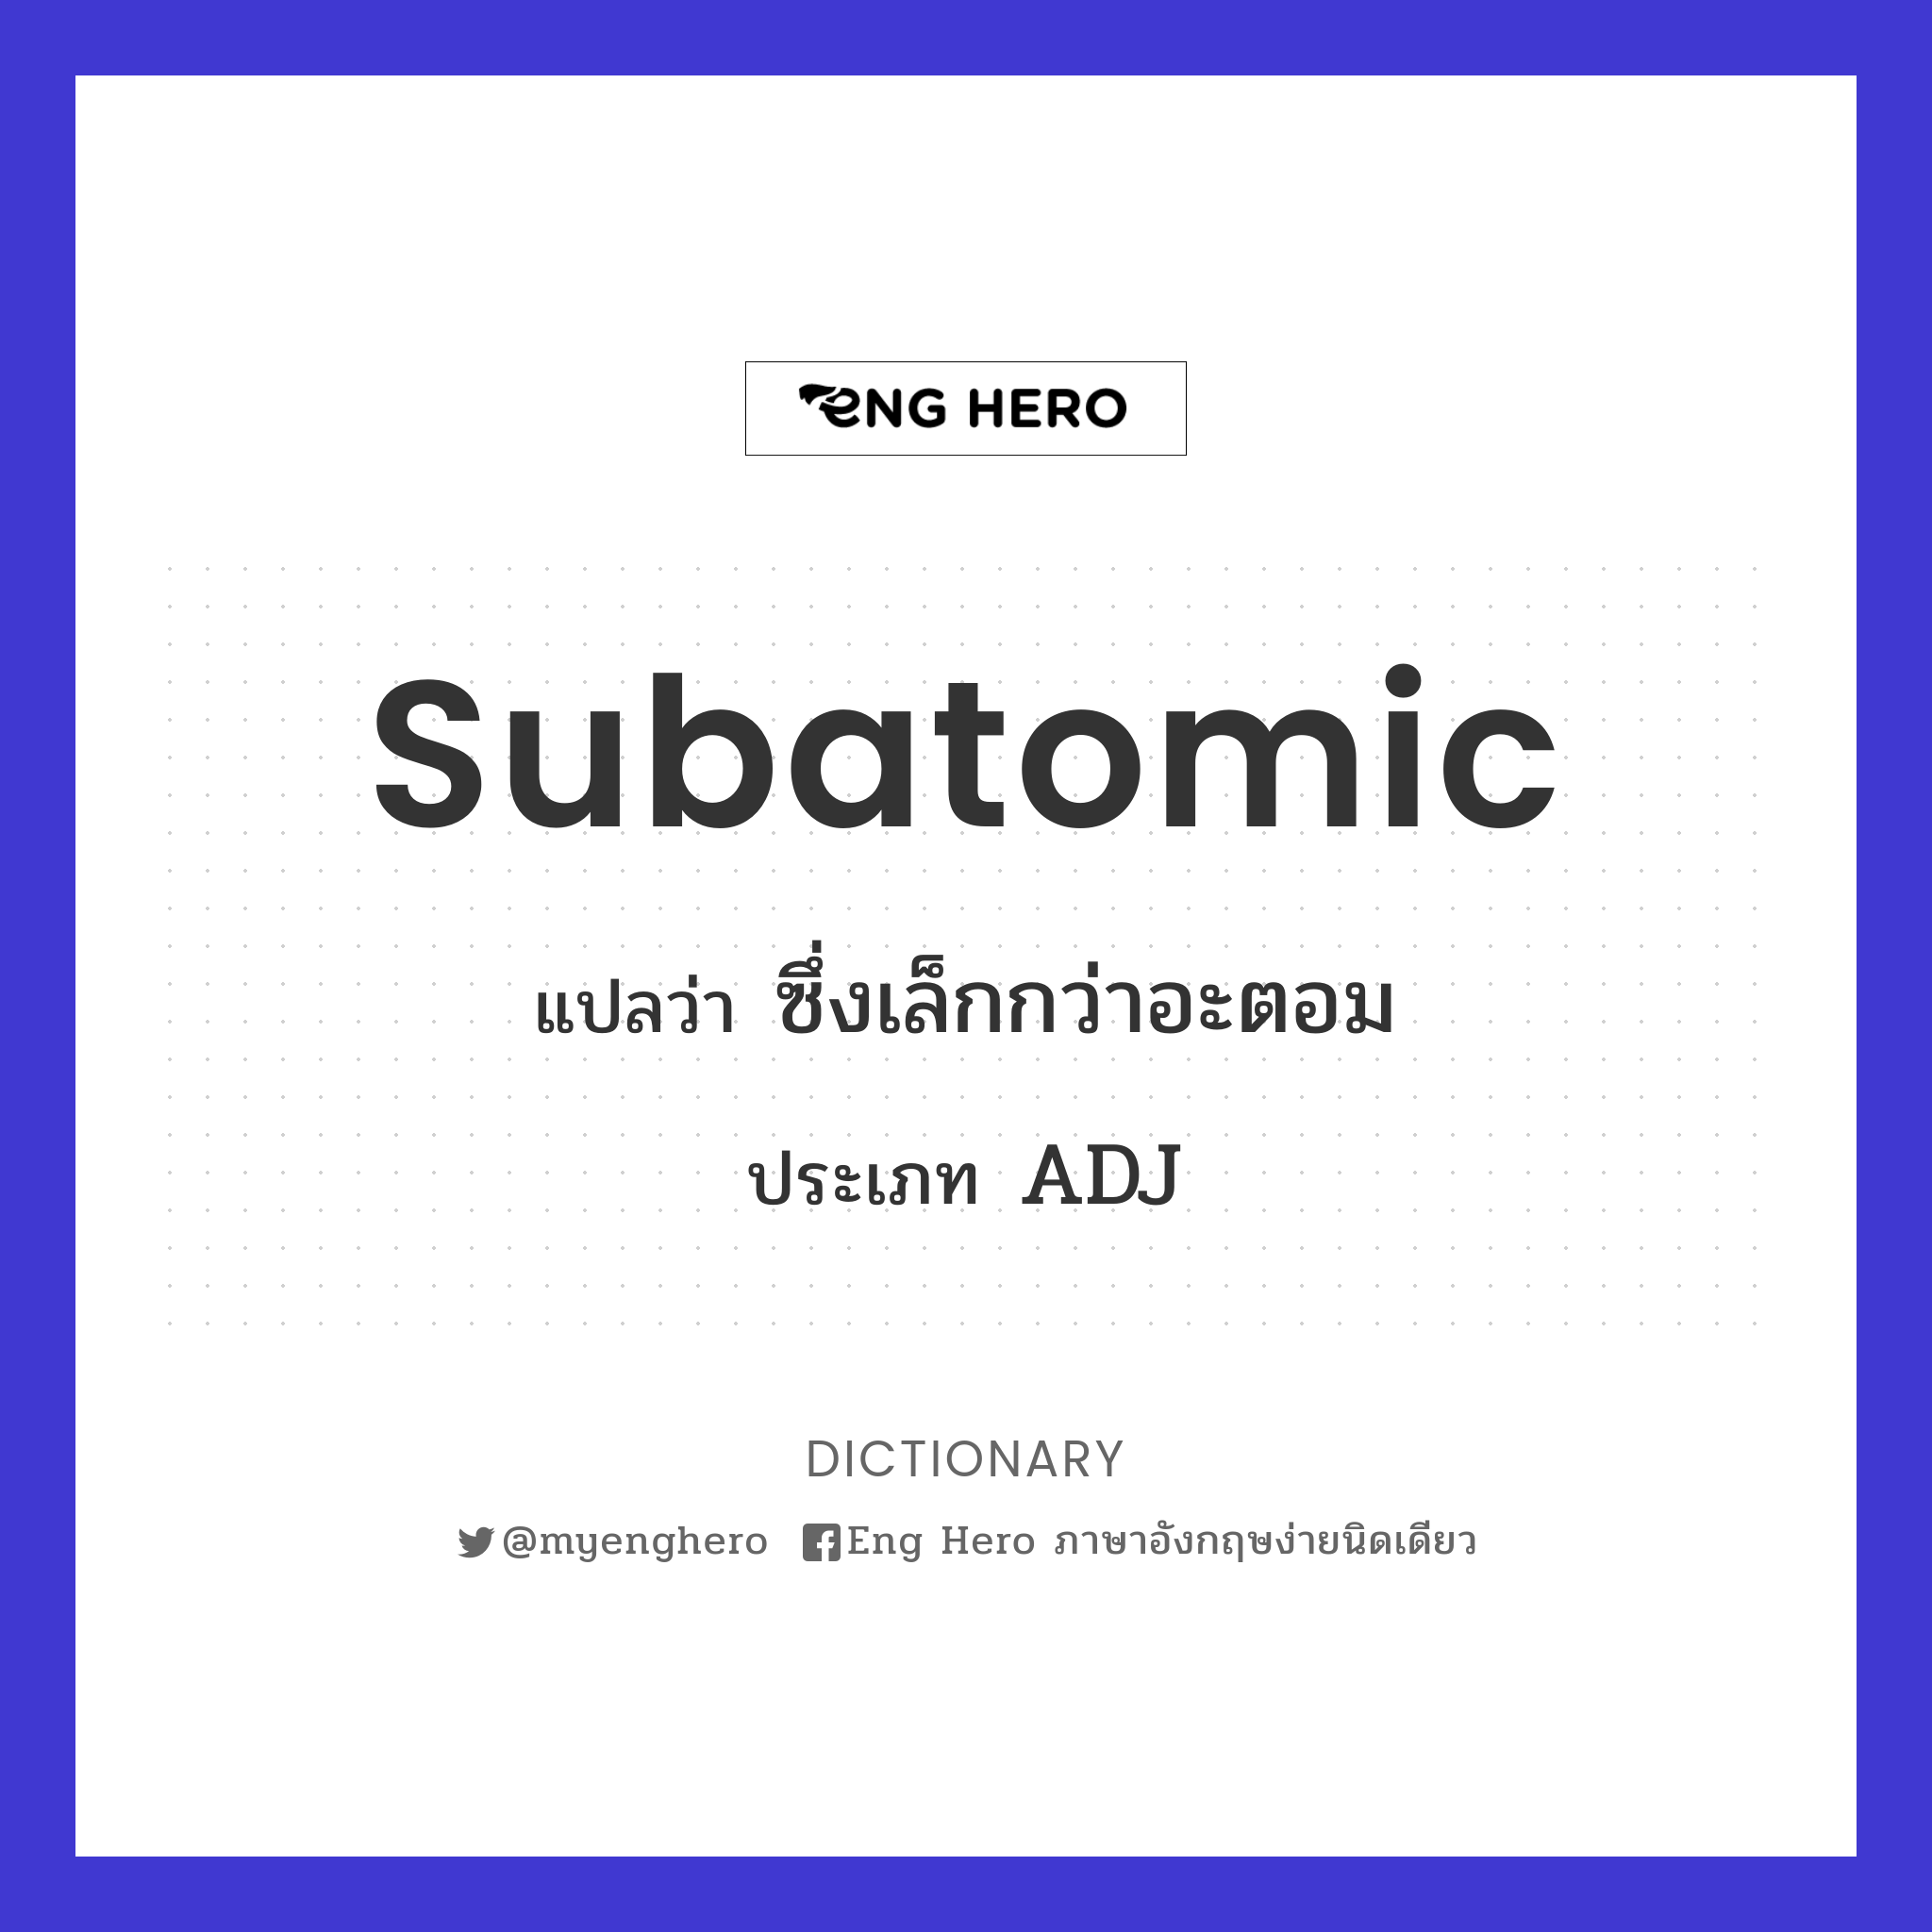 subatomic